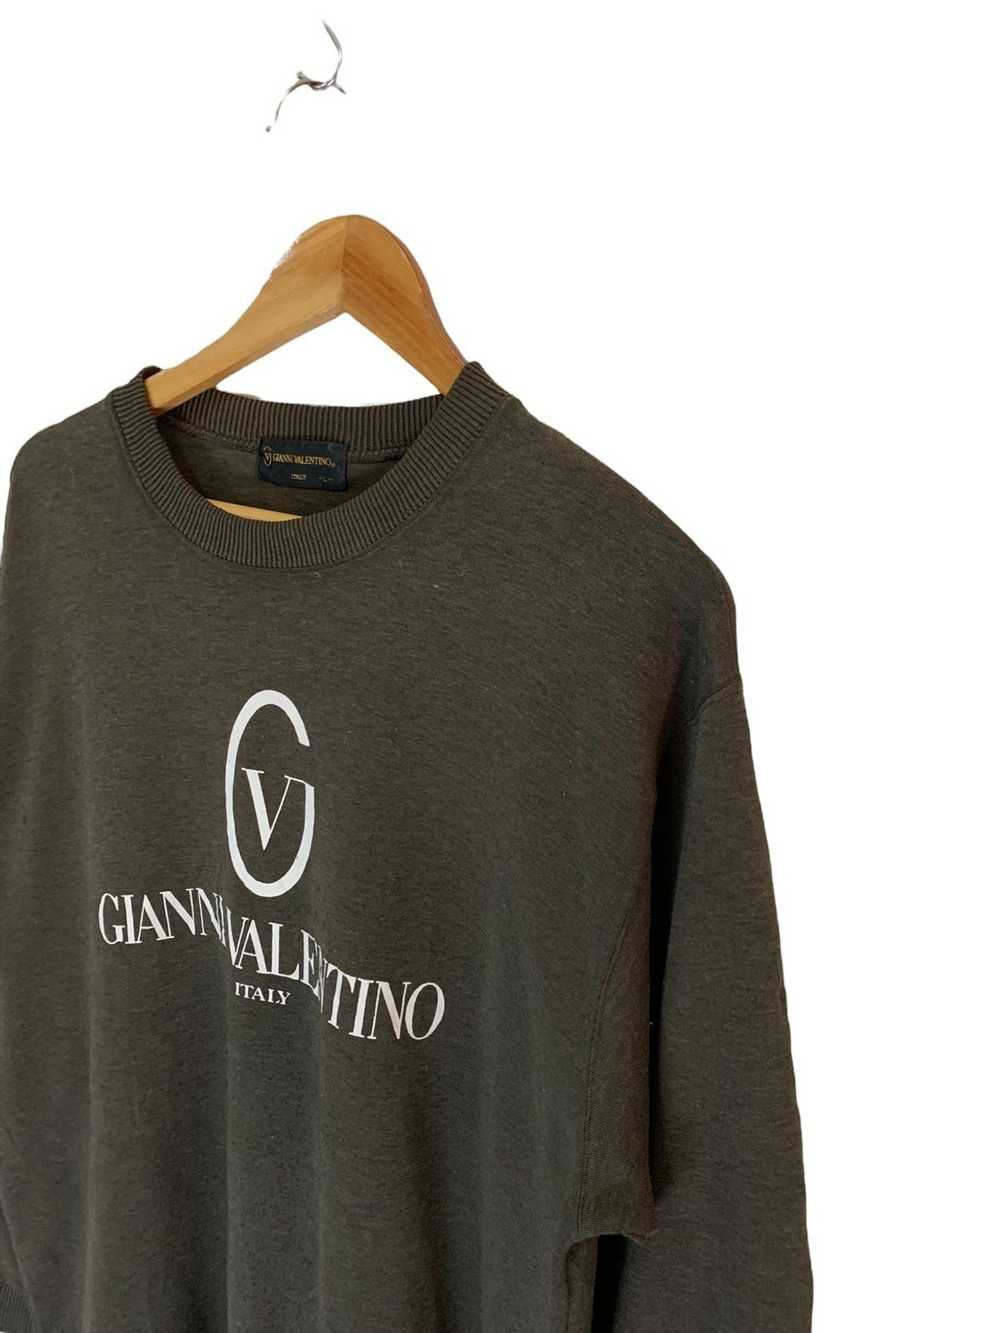 Gianni × Valentino Gianni Valentino sweatshirt - image 2